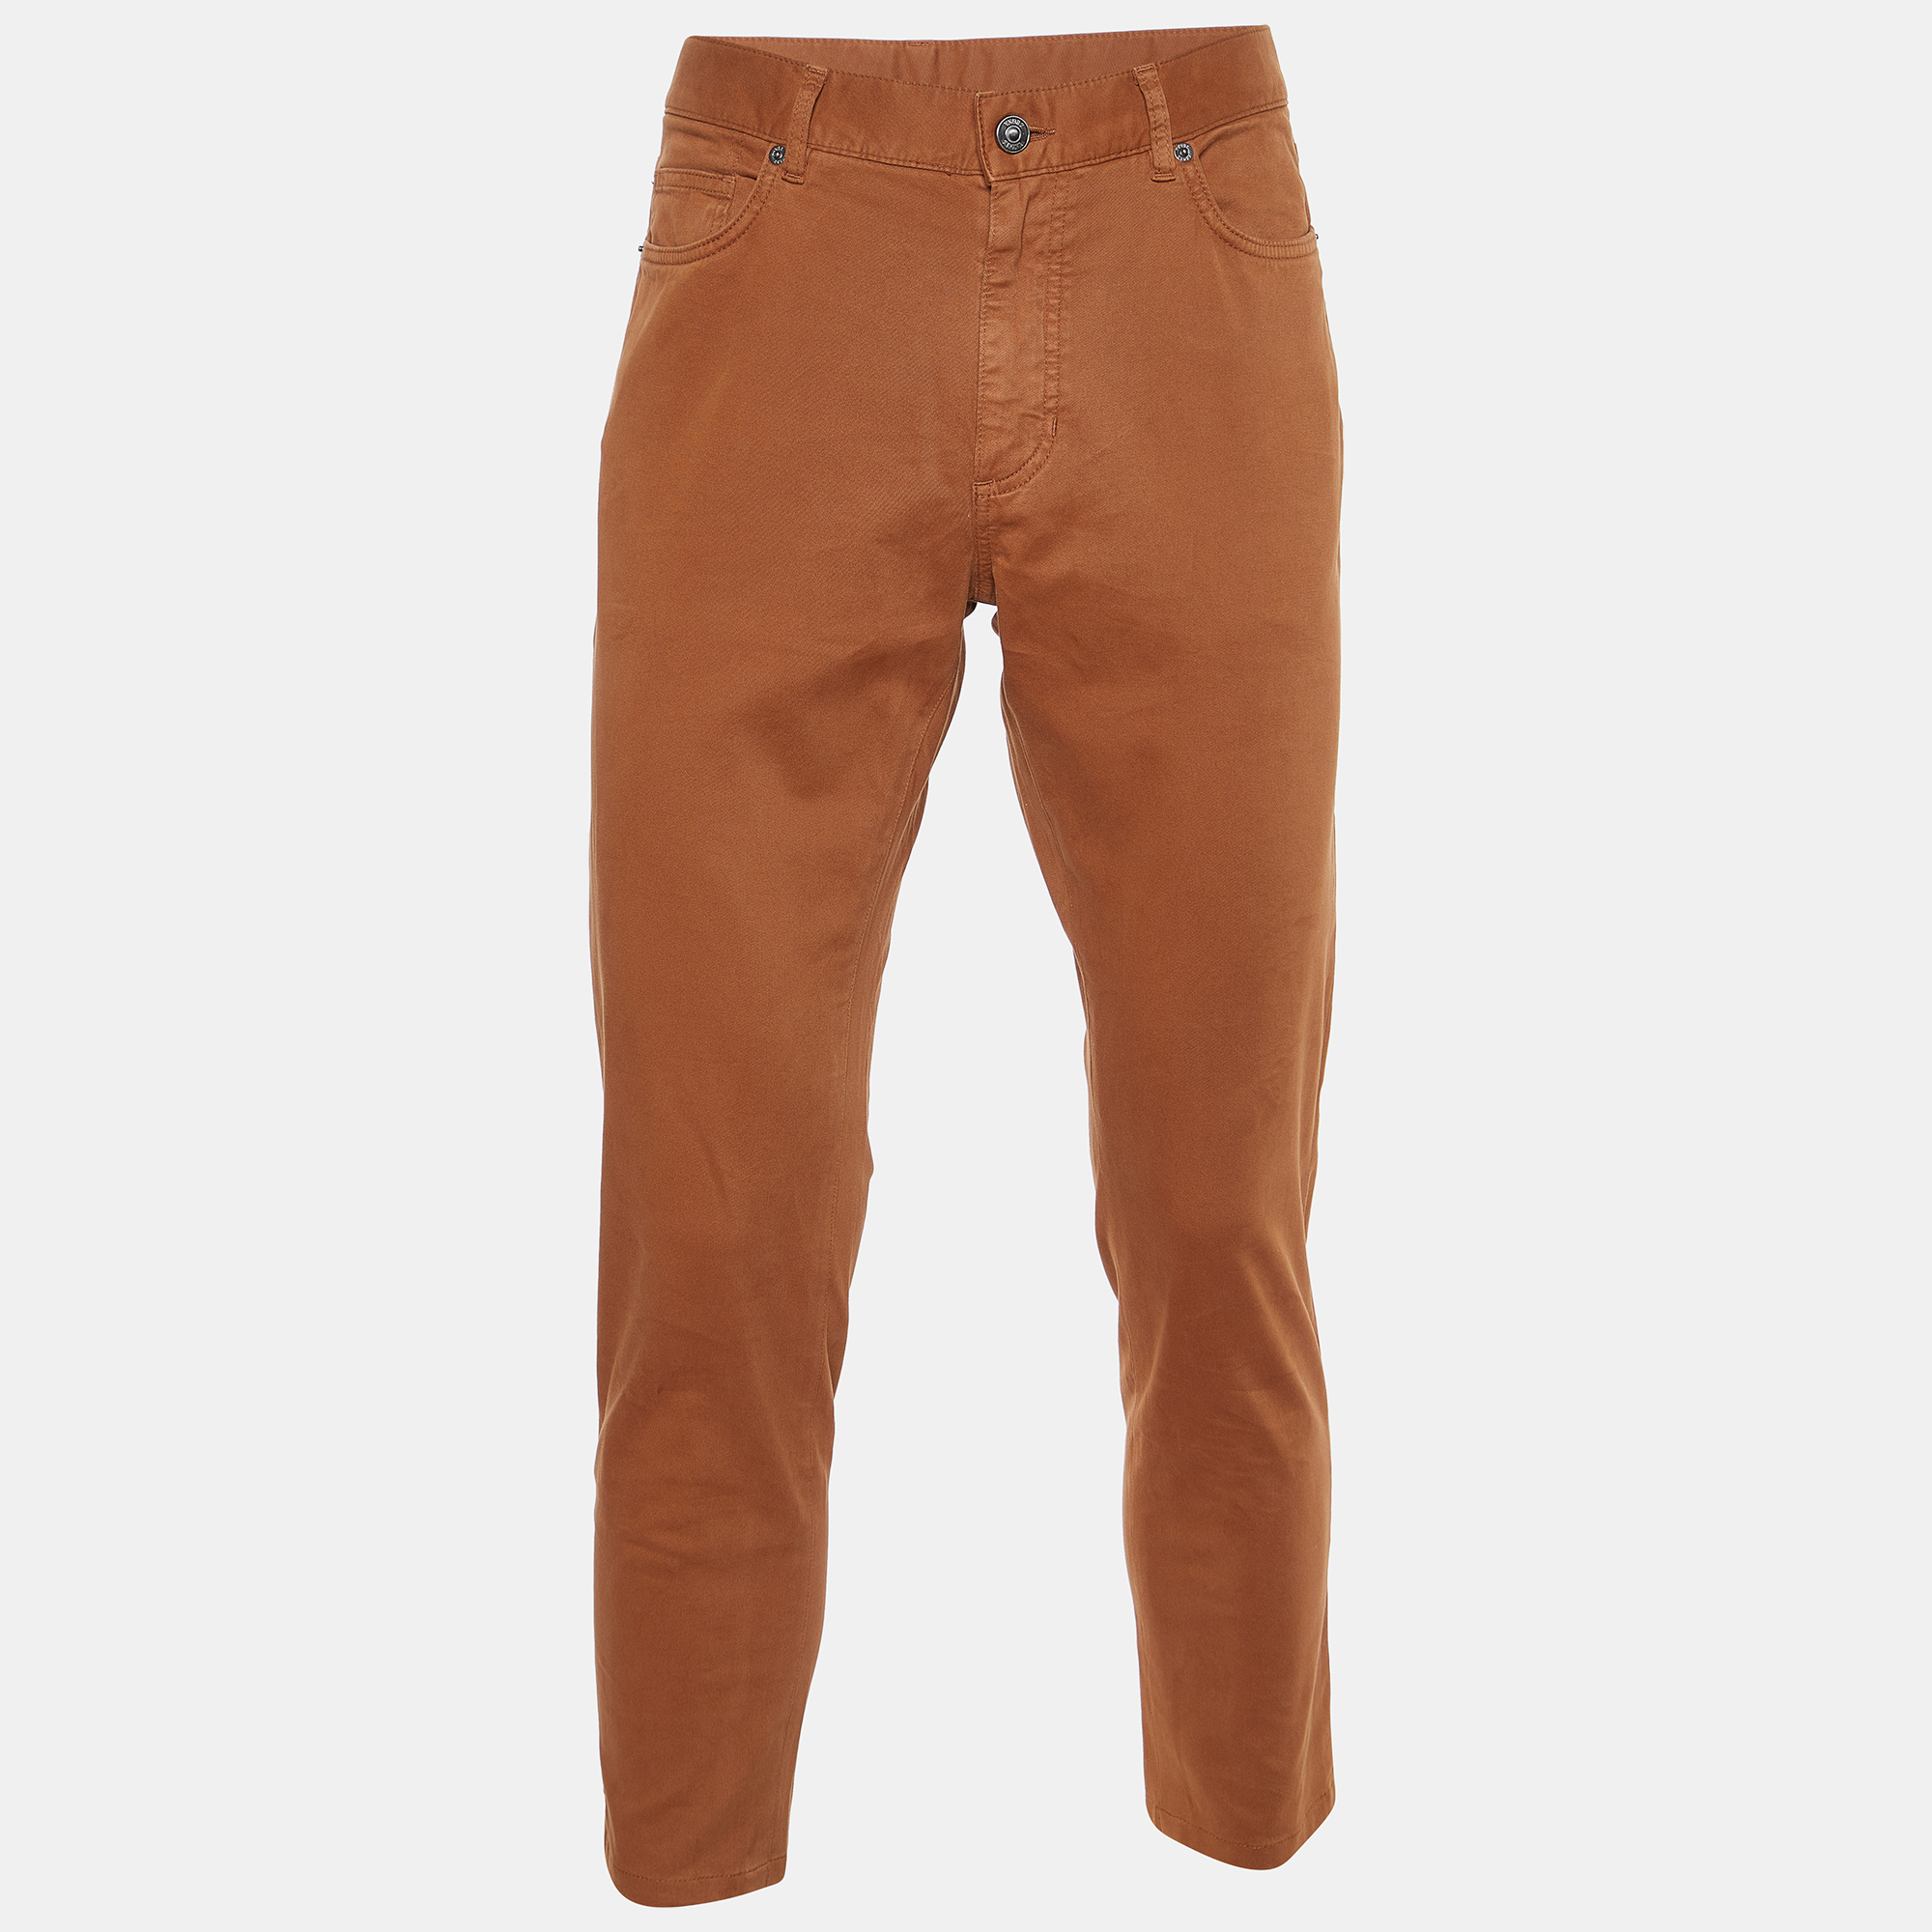 Ermenegildo zegna zegna brown cotton regular fit city trousers m/waist 34.5"